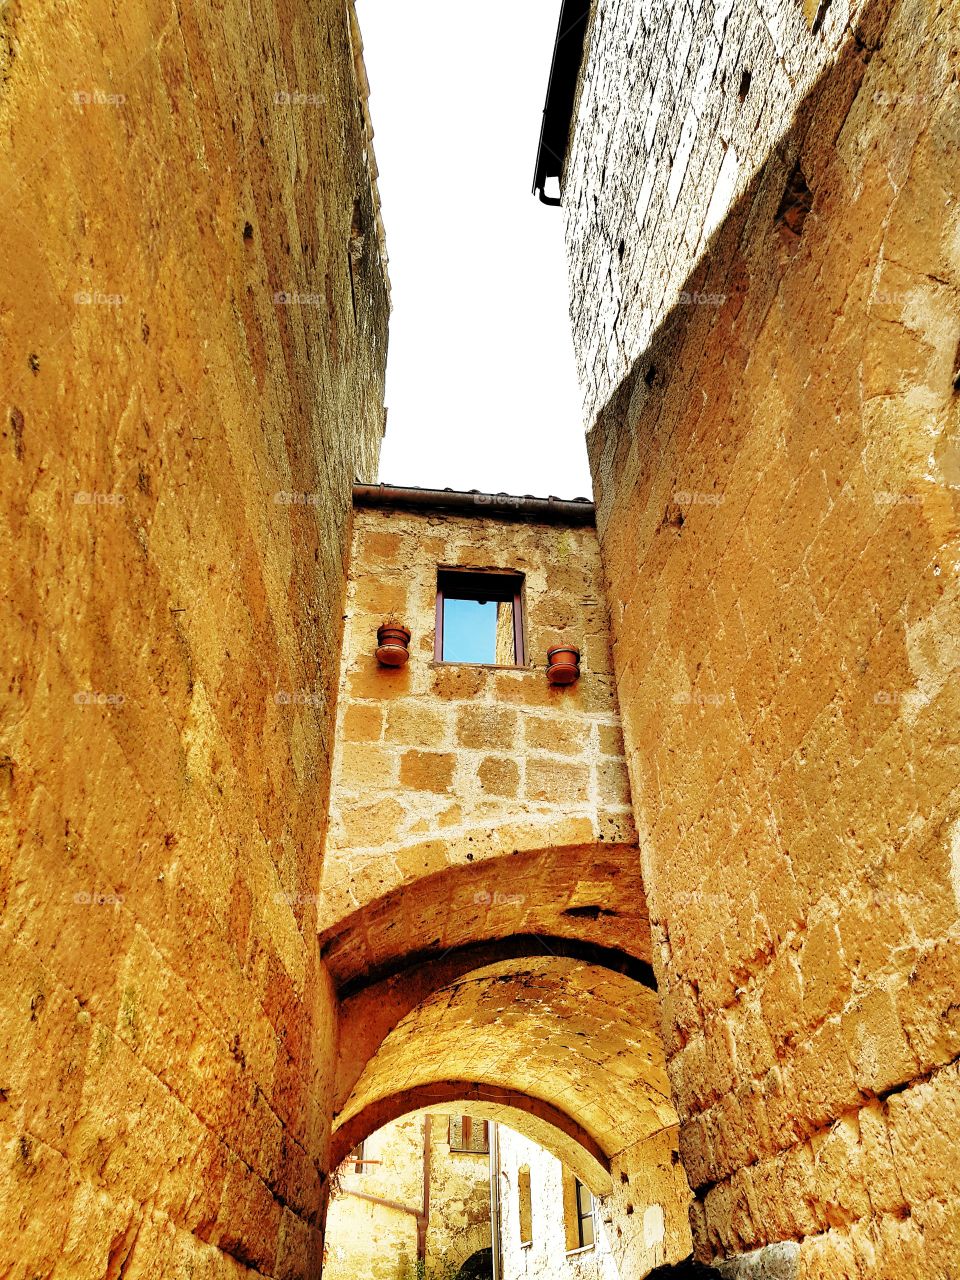 Borgo medievale italiano, italian old city medieval